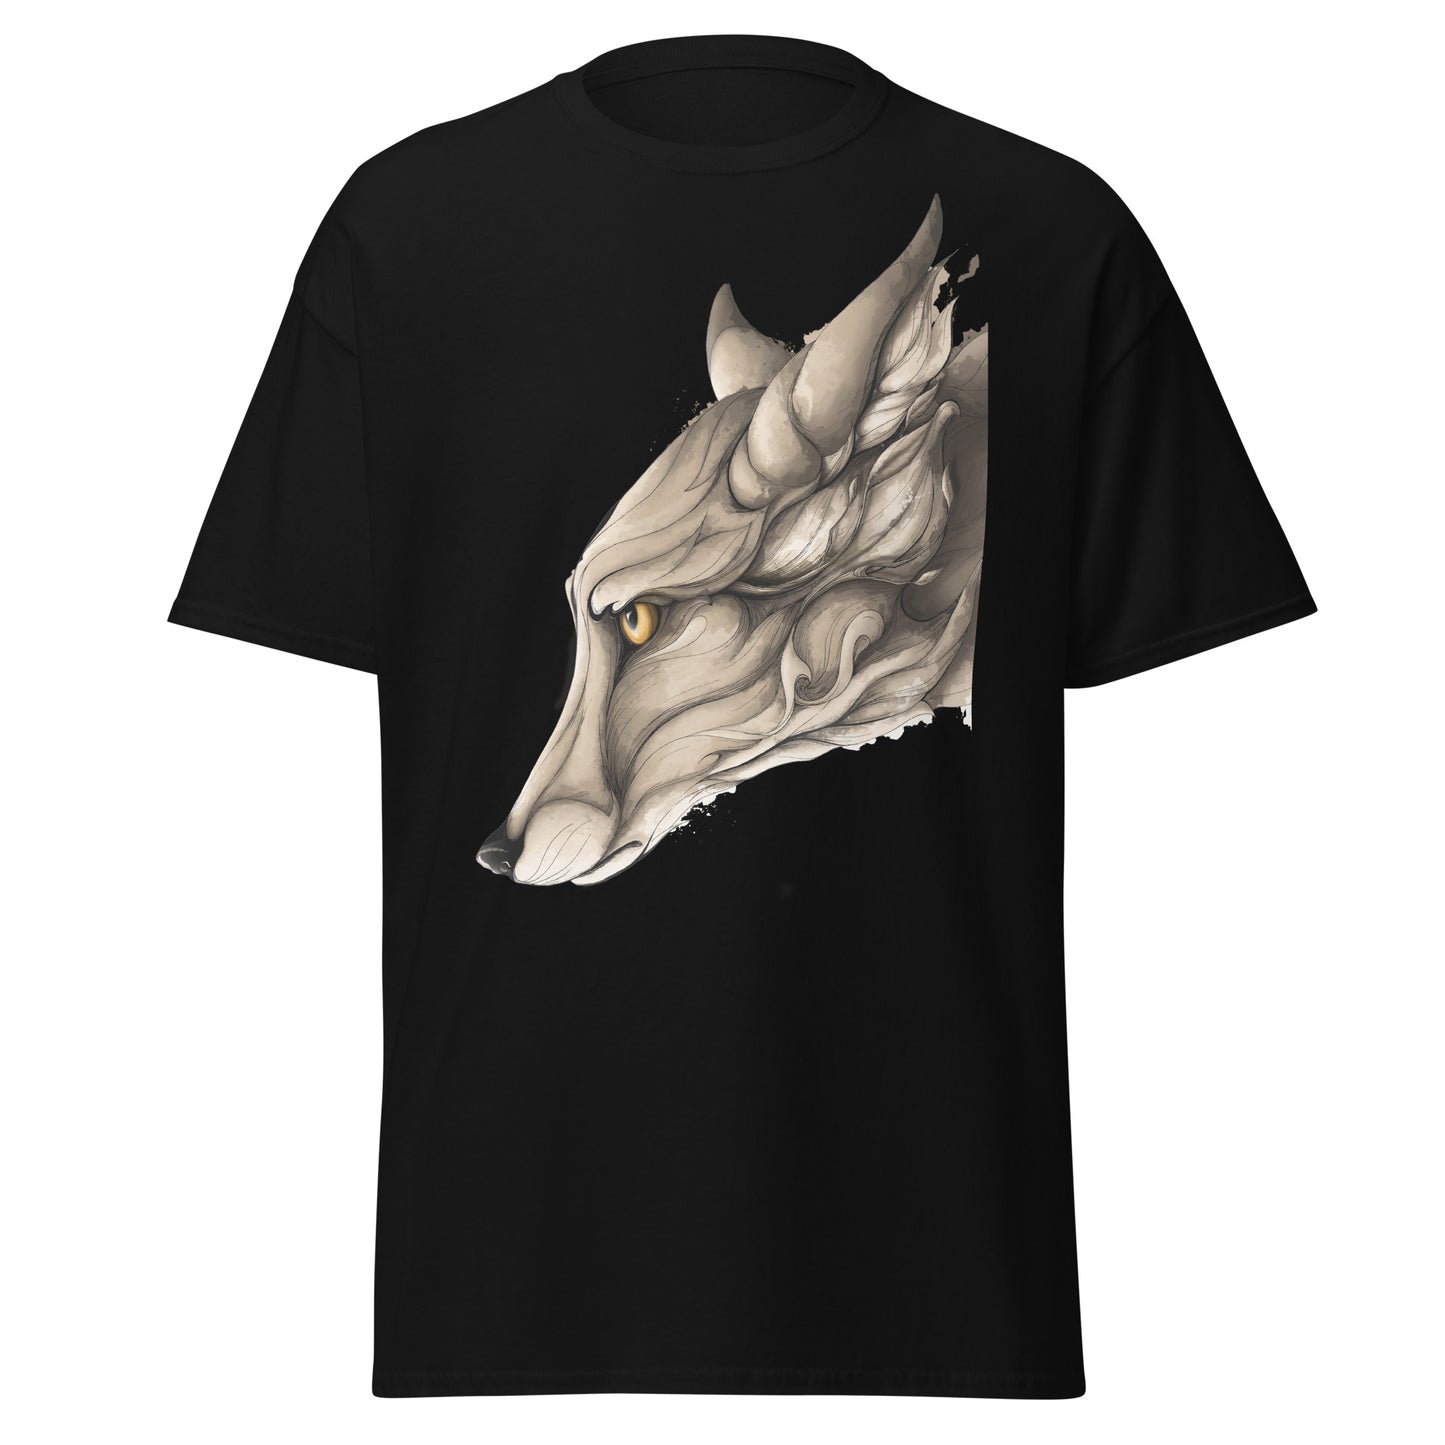 The Wood Fox T-shirt